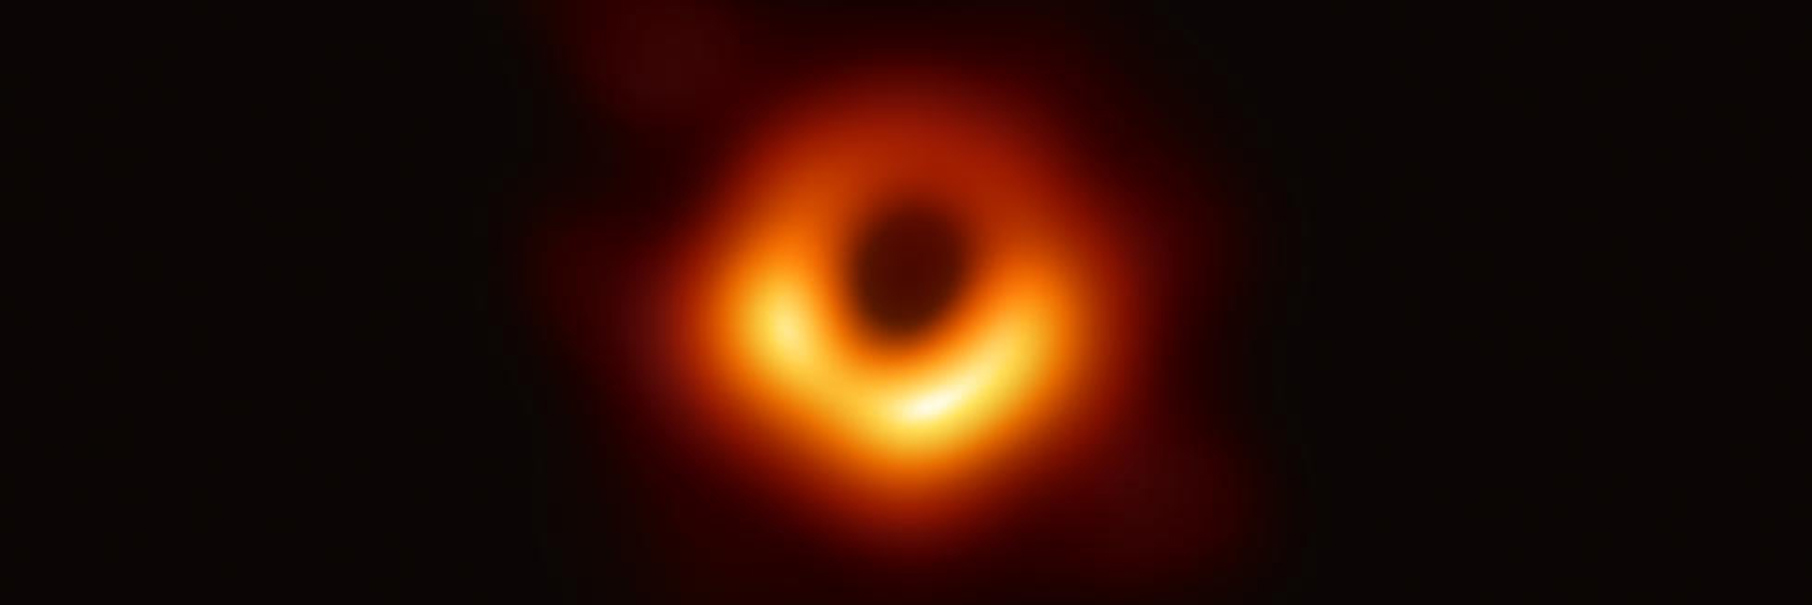 black hole photograph